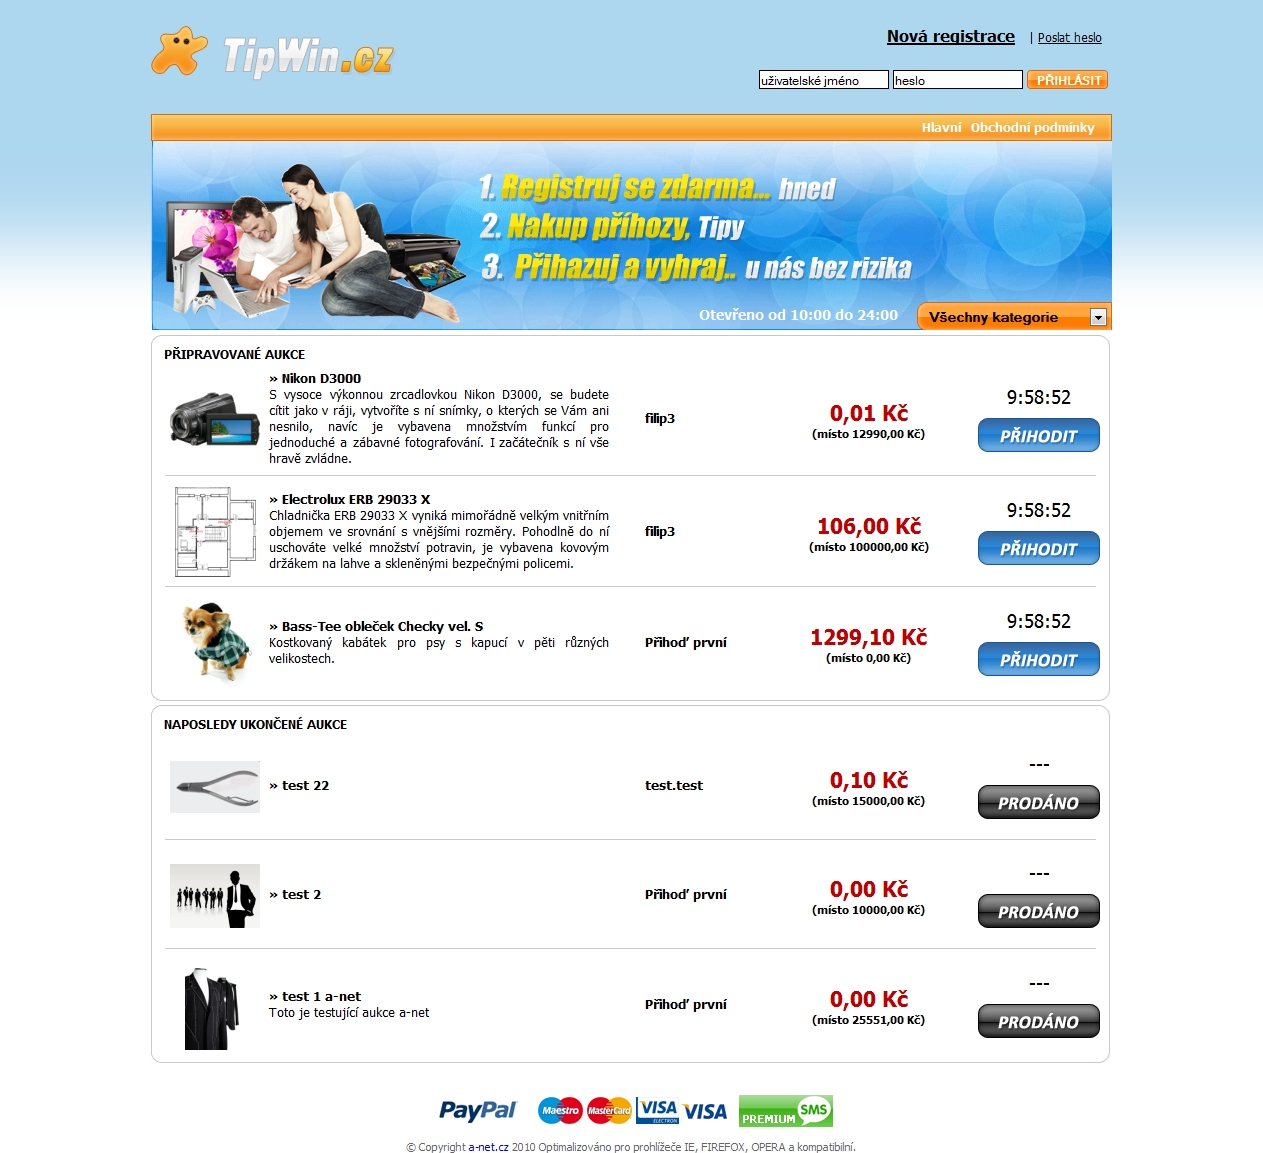 TipWin.cz - Pay&Bid aukce